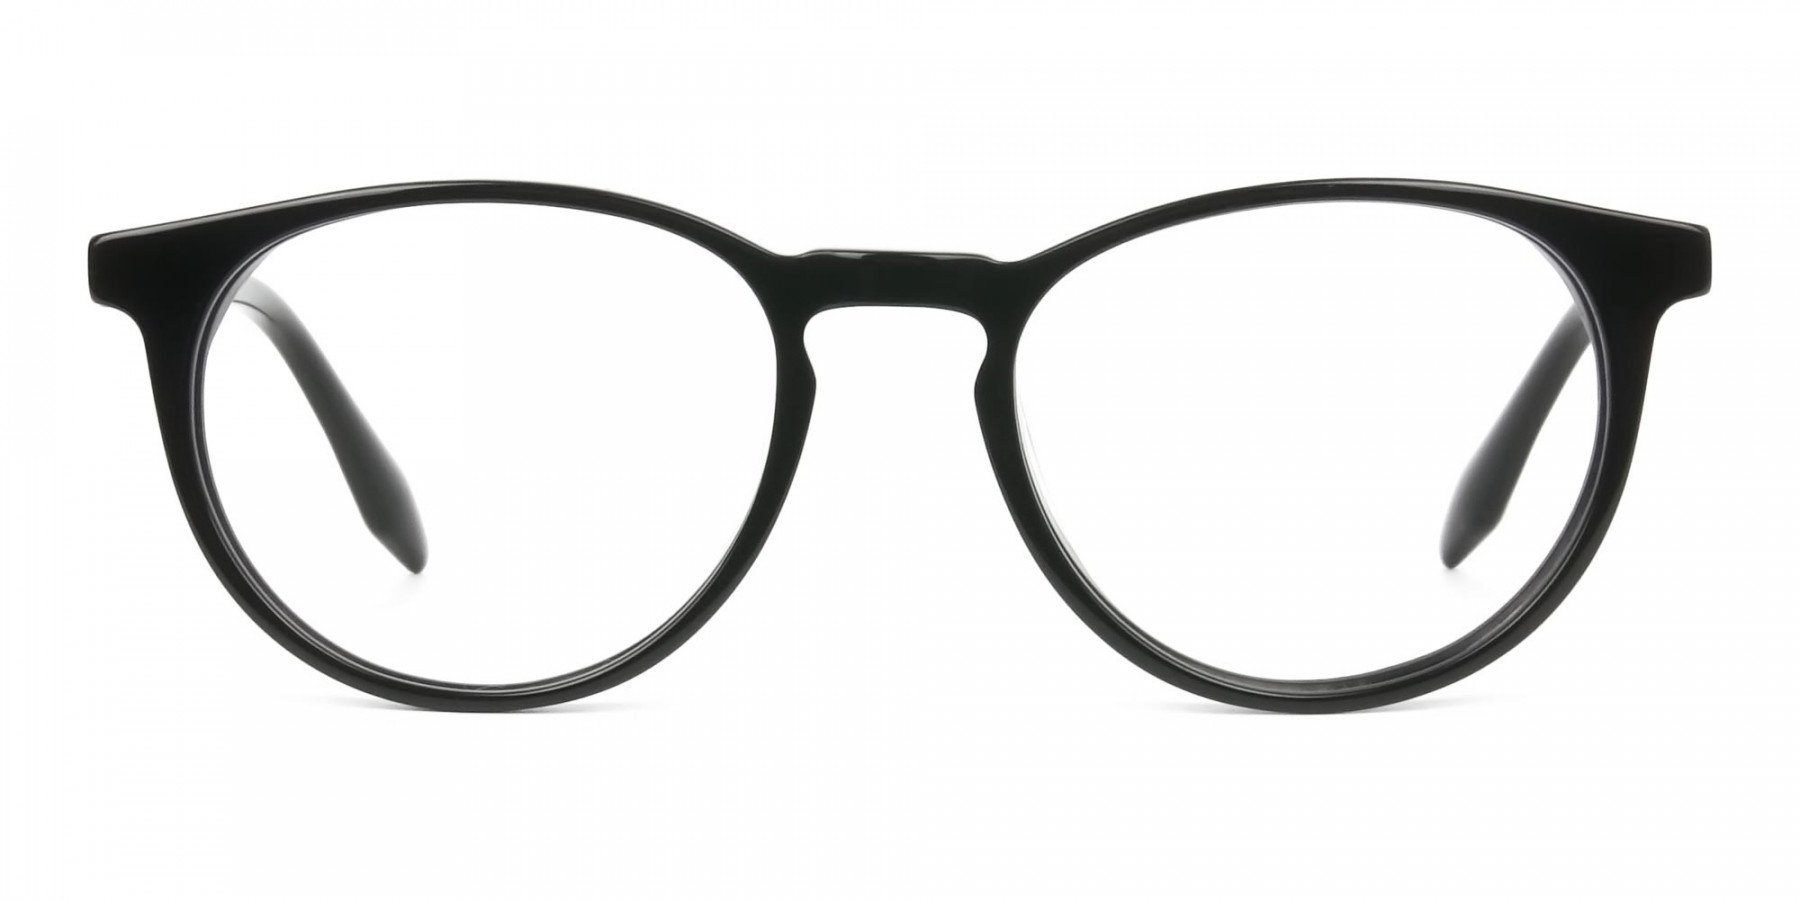 Keyhole Black Retro Round Glasses in Acetate - 1